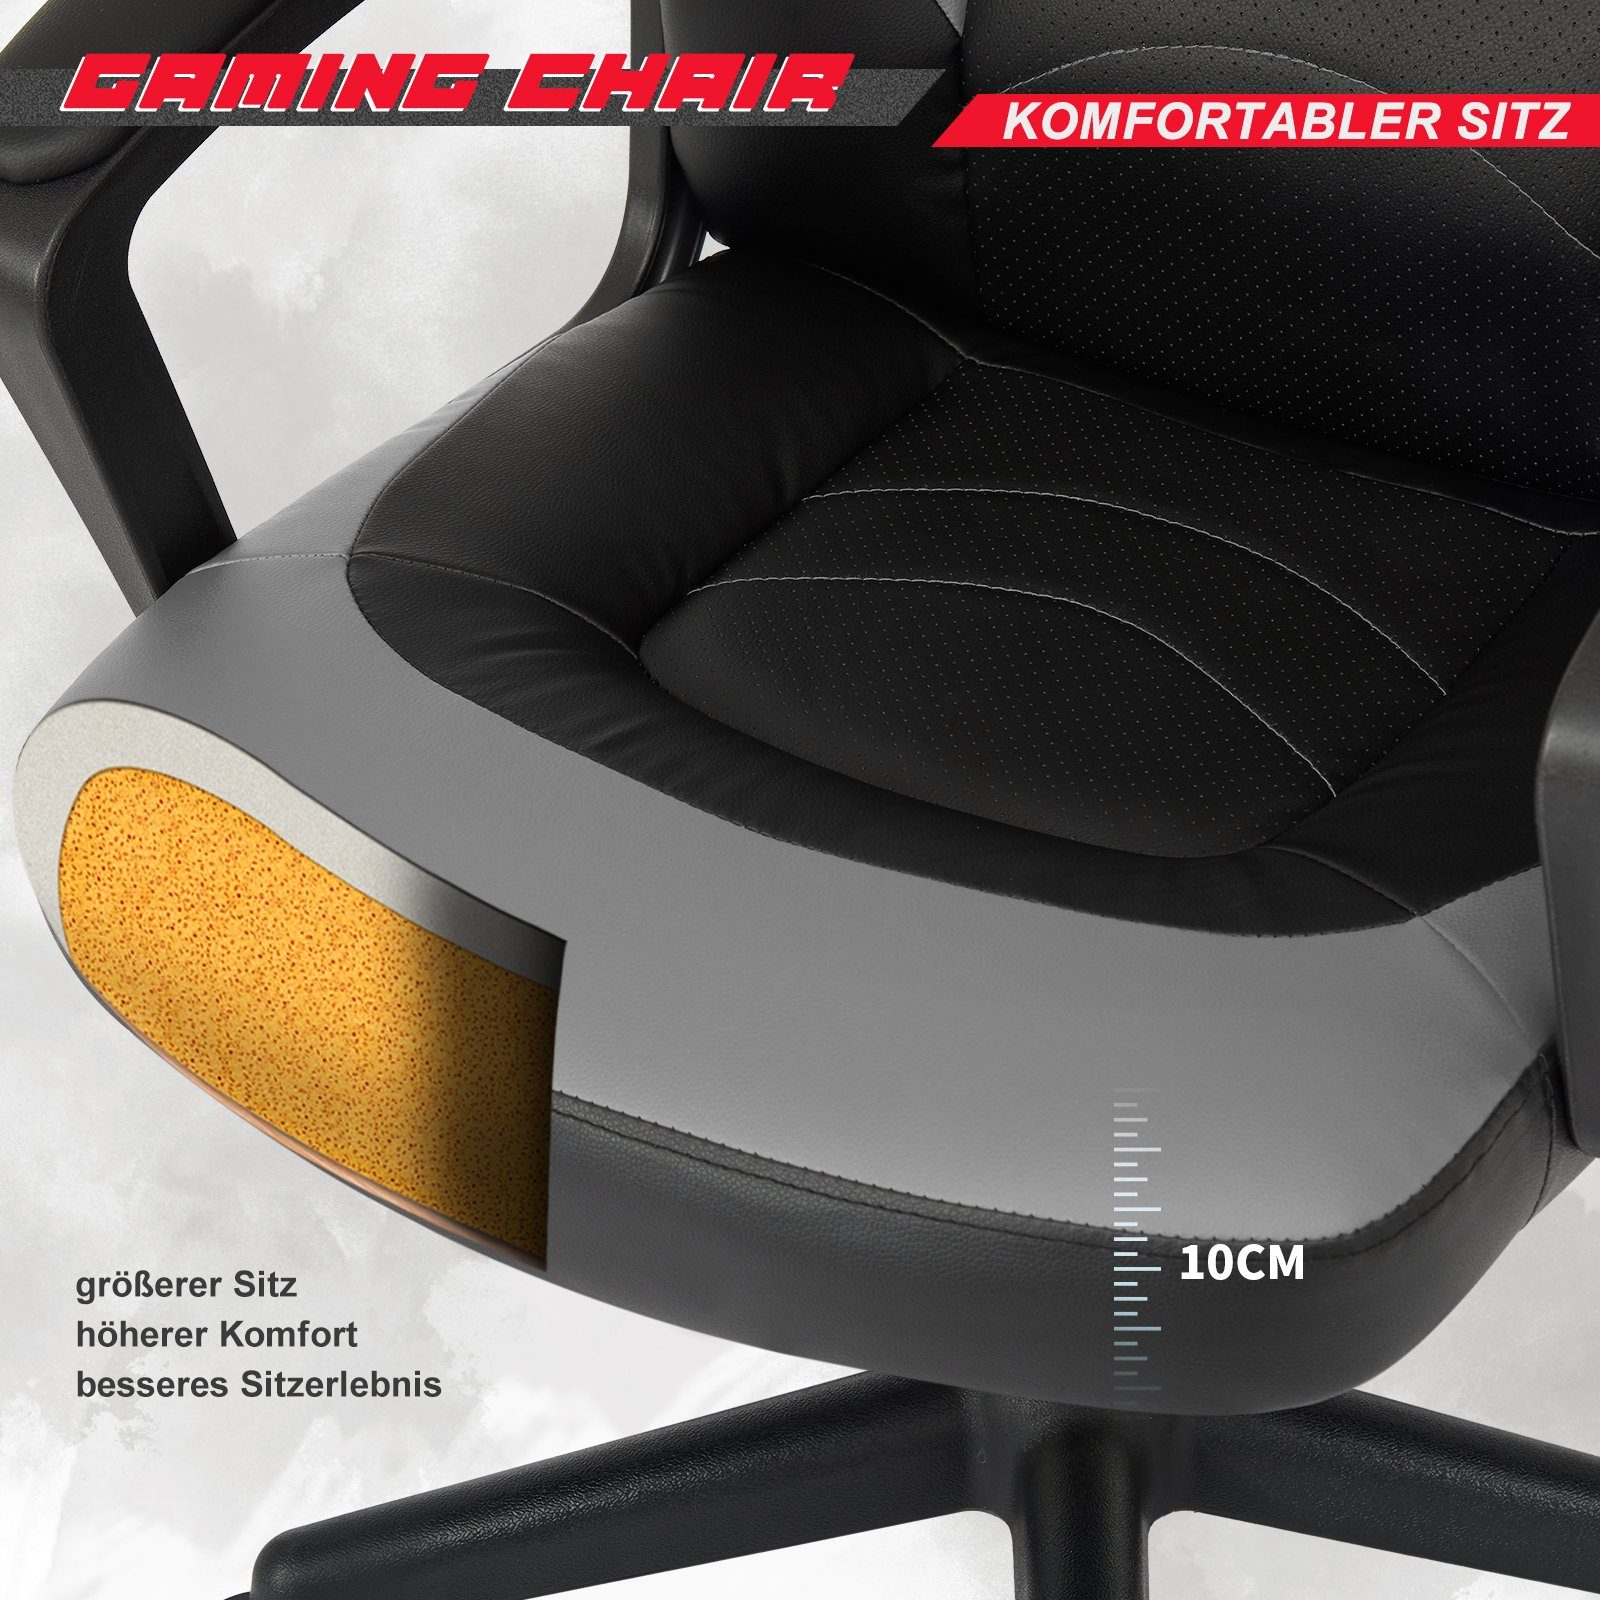 Intimate Home Office Bürostuhl,Computerstuhl Heart WM grau Gaming Chair